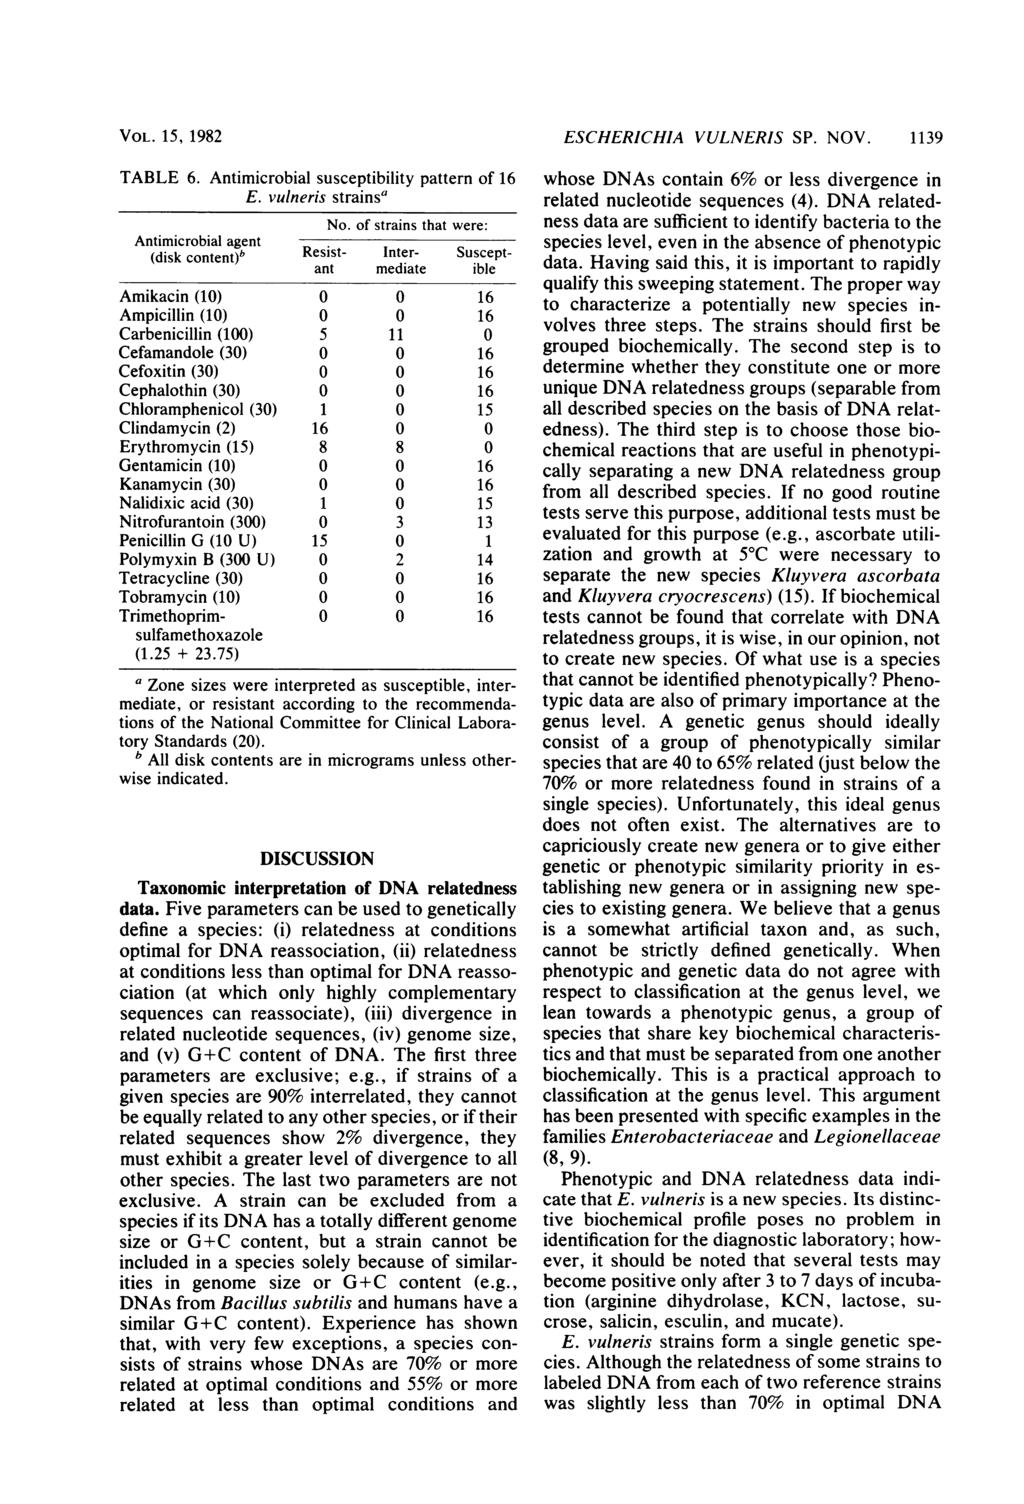 VOL. 15, 1982 TABLE 6. Antimicrobial susceptibility pattern of 16 E. vulneris strainsa No.